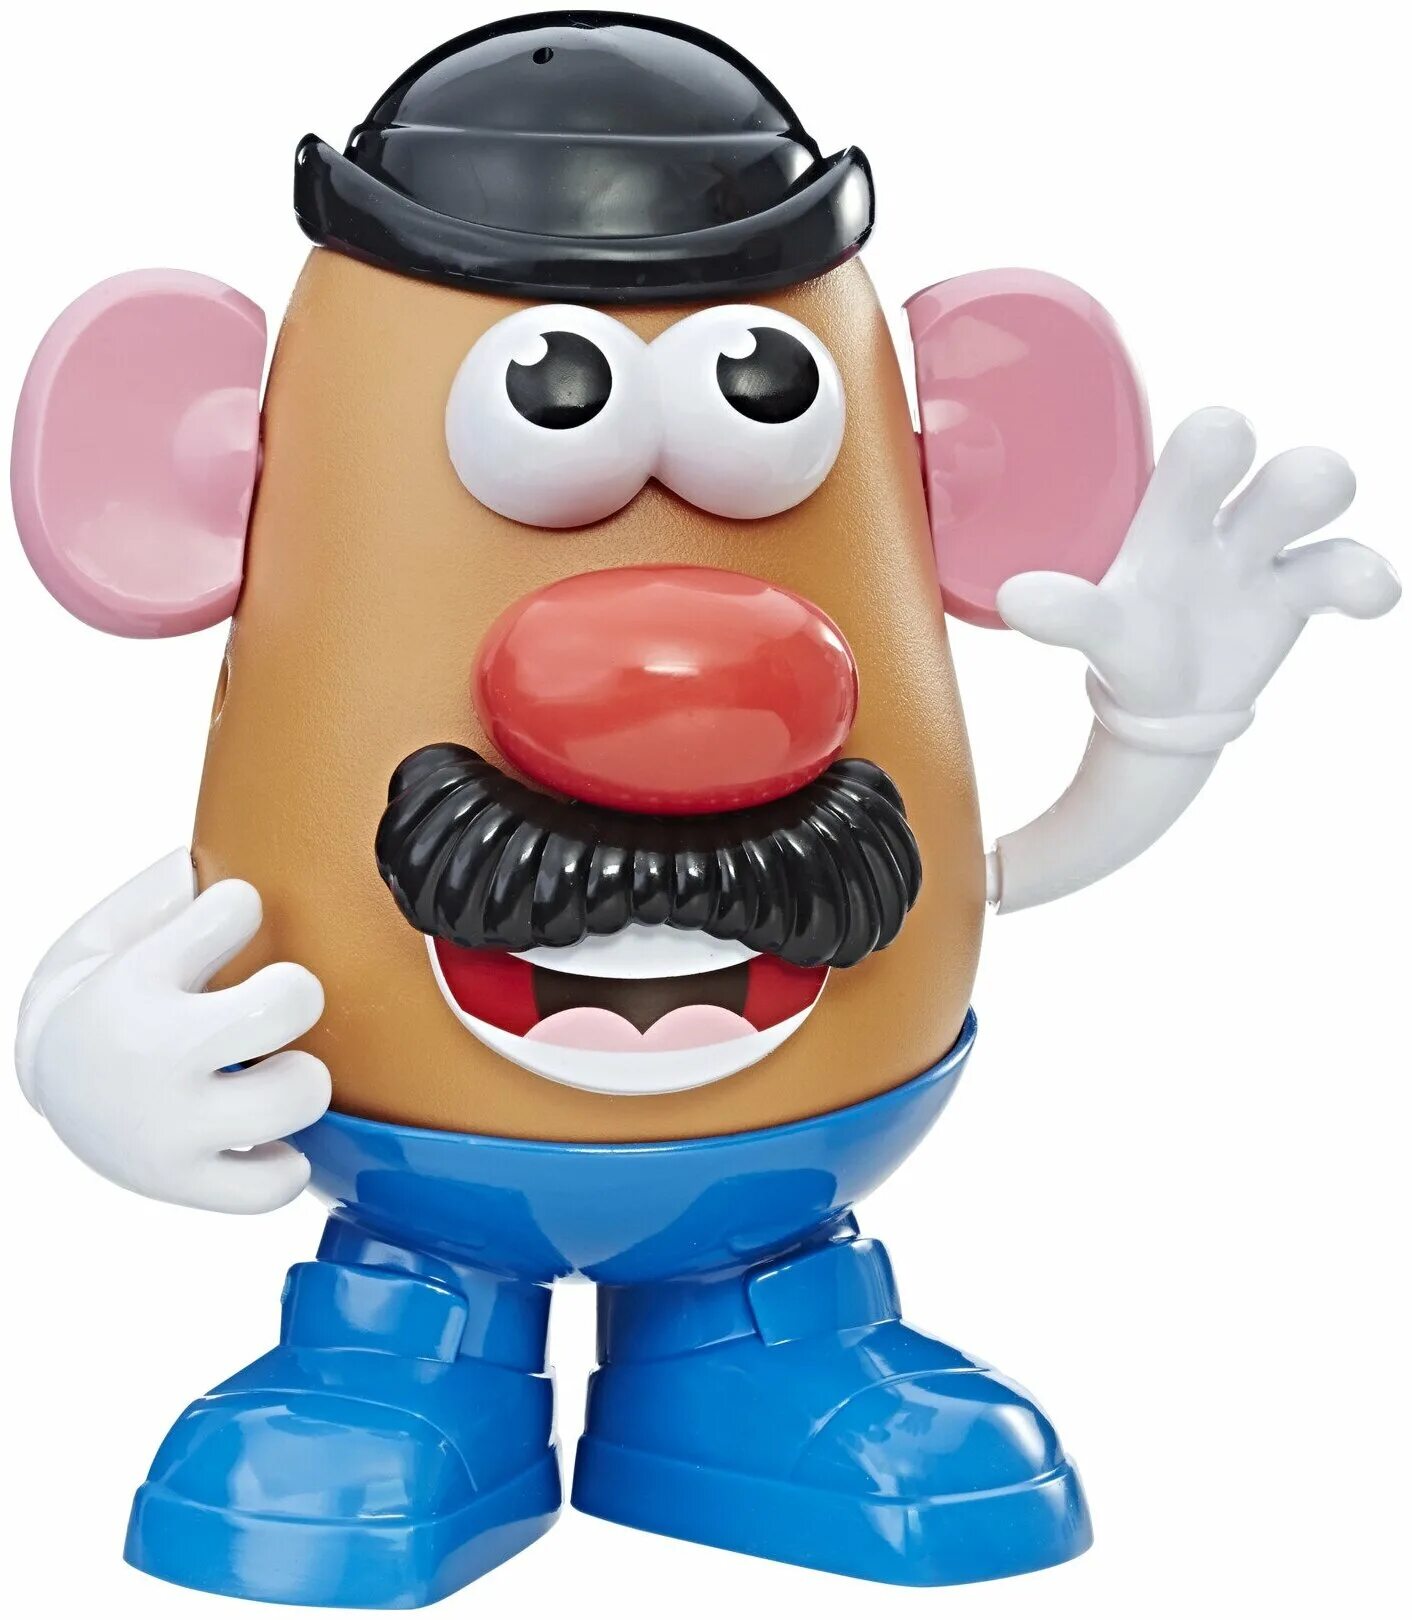 Mr potato. Hasbro игровой набор Mr Potato head 27657/27656. Мистер картофельная голова Hasbro. Мистер Потато история игрушек. Mr Potato head игрушка.